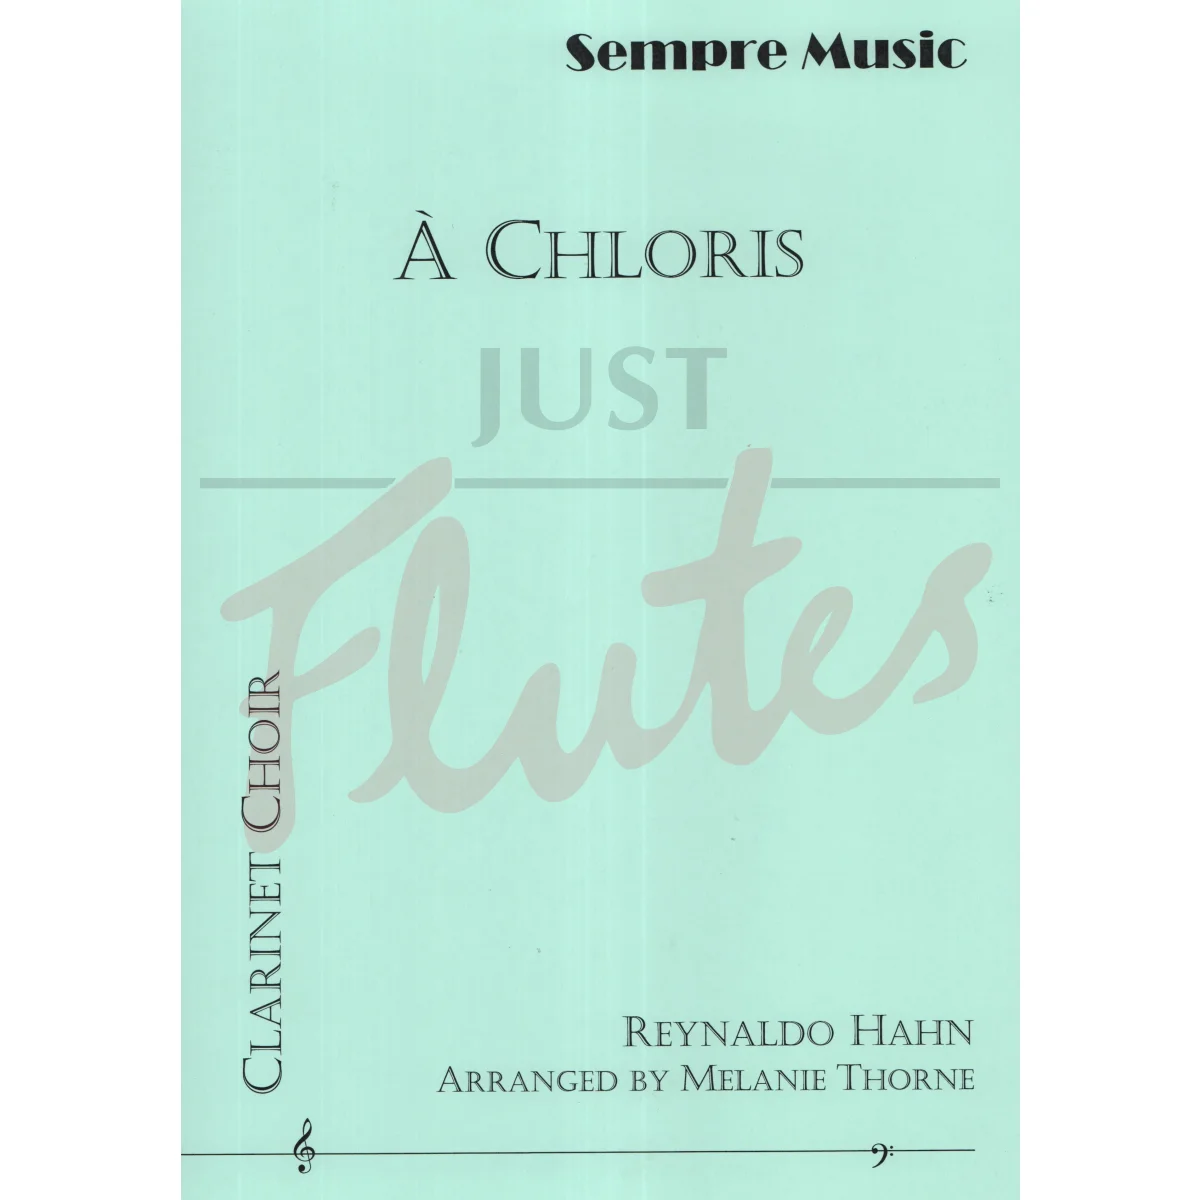 À Chloris for Clarinet Choir